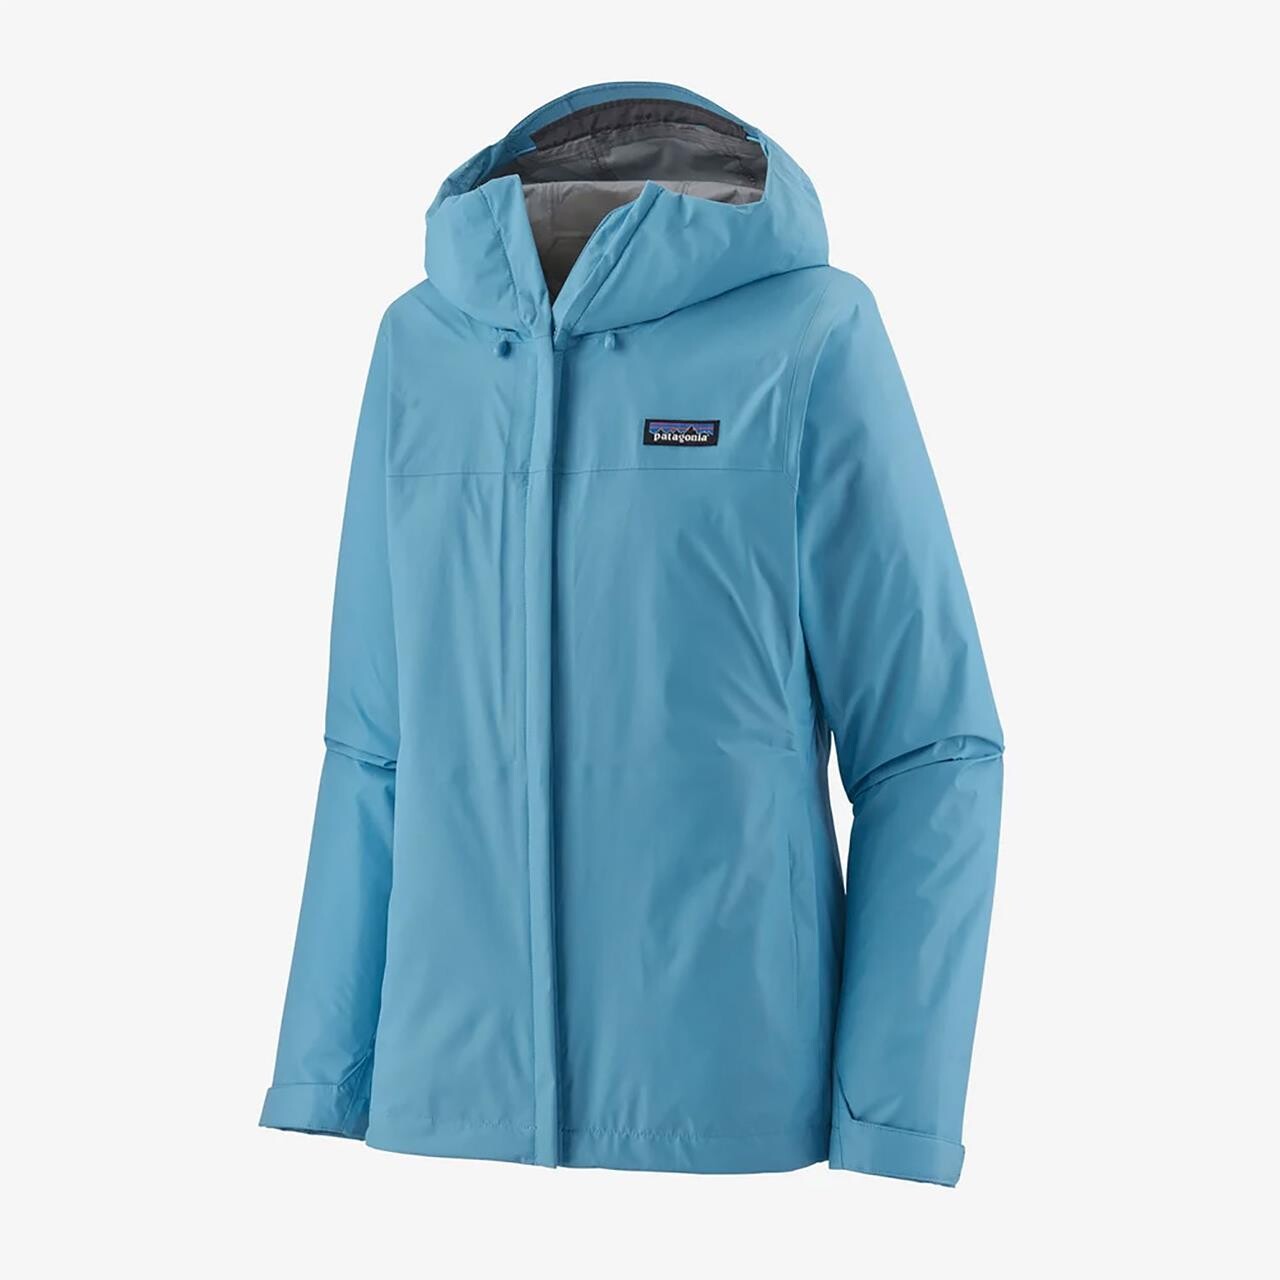 Patagonia Womens Torrentshell 3L Rain Jacket (Blå (LAGO BLUE) Large)